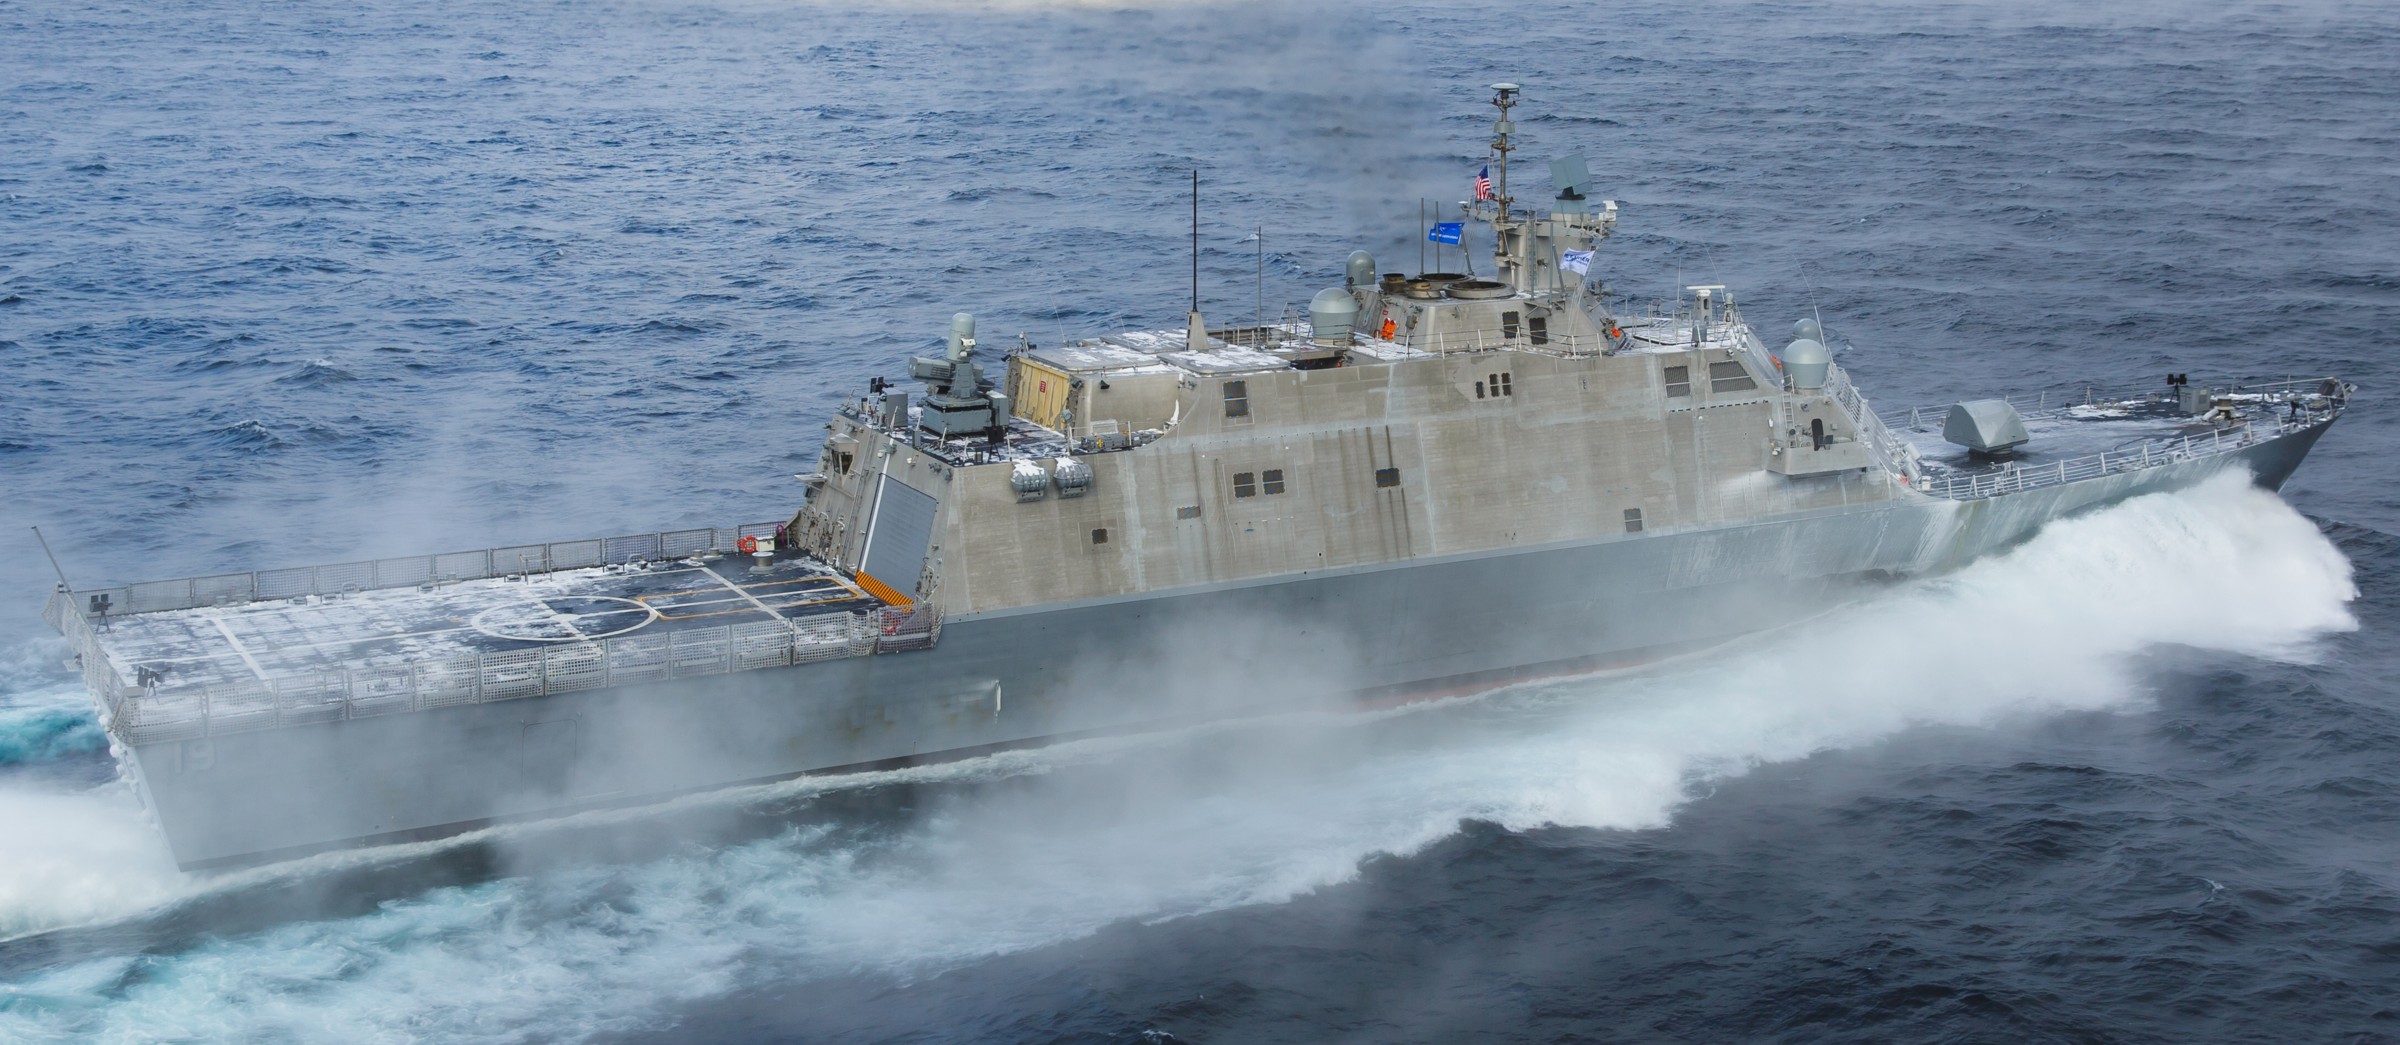 lcs-19 uss st. louis freedom class littoral combat ship us navy 15 acceptance trials lockheed martin marinette marine fincantieri